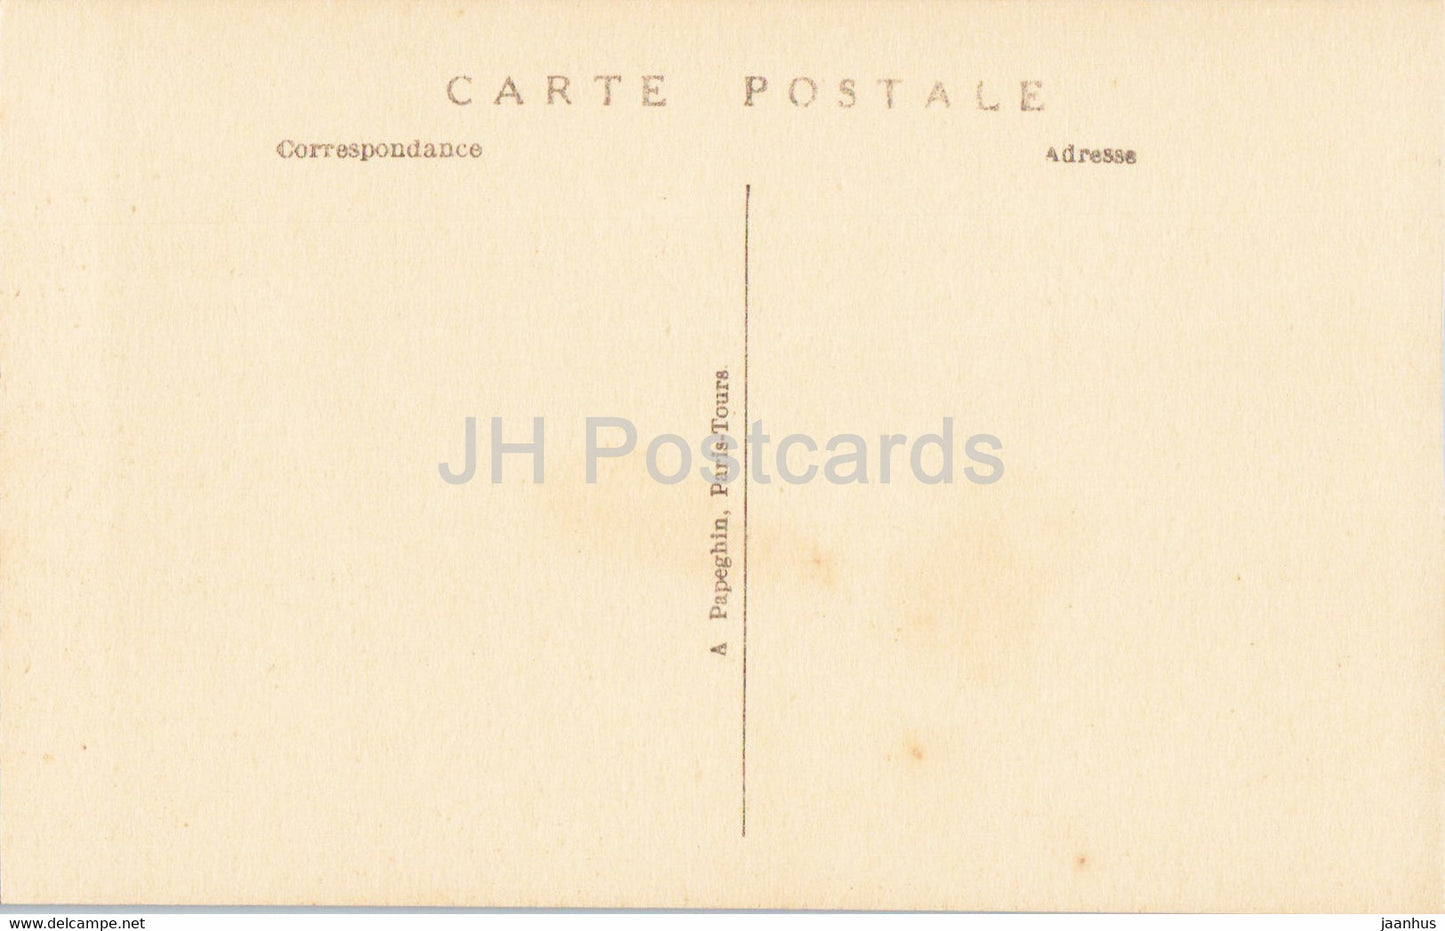 Versailles - Palais du Grand Trianon - Le Peristyle - 71 - alte Postkarte - Frankreich - unbenutzt